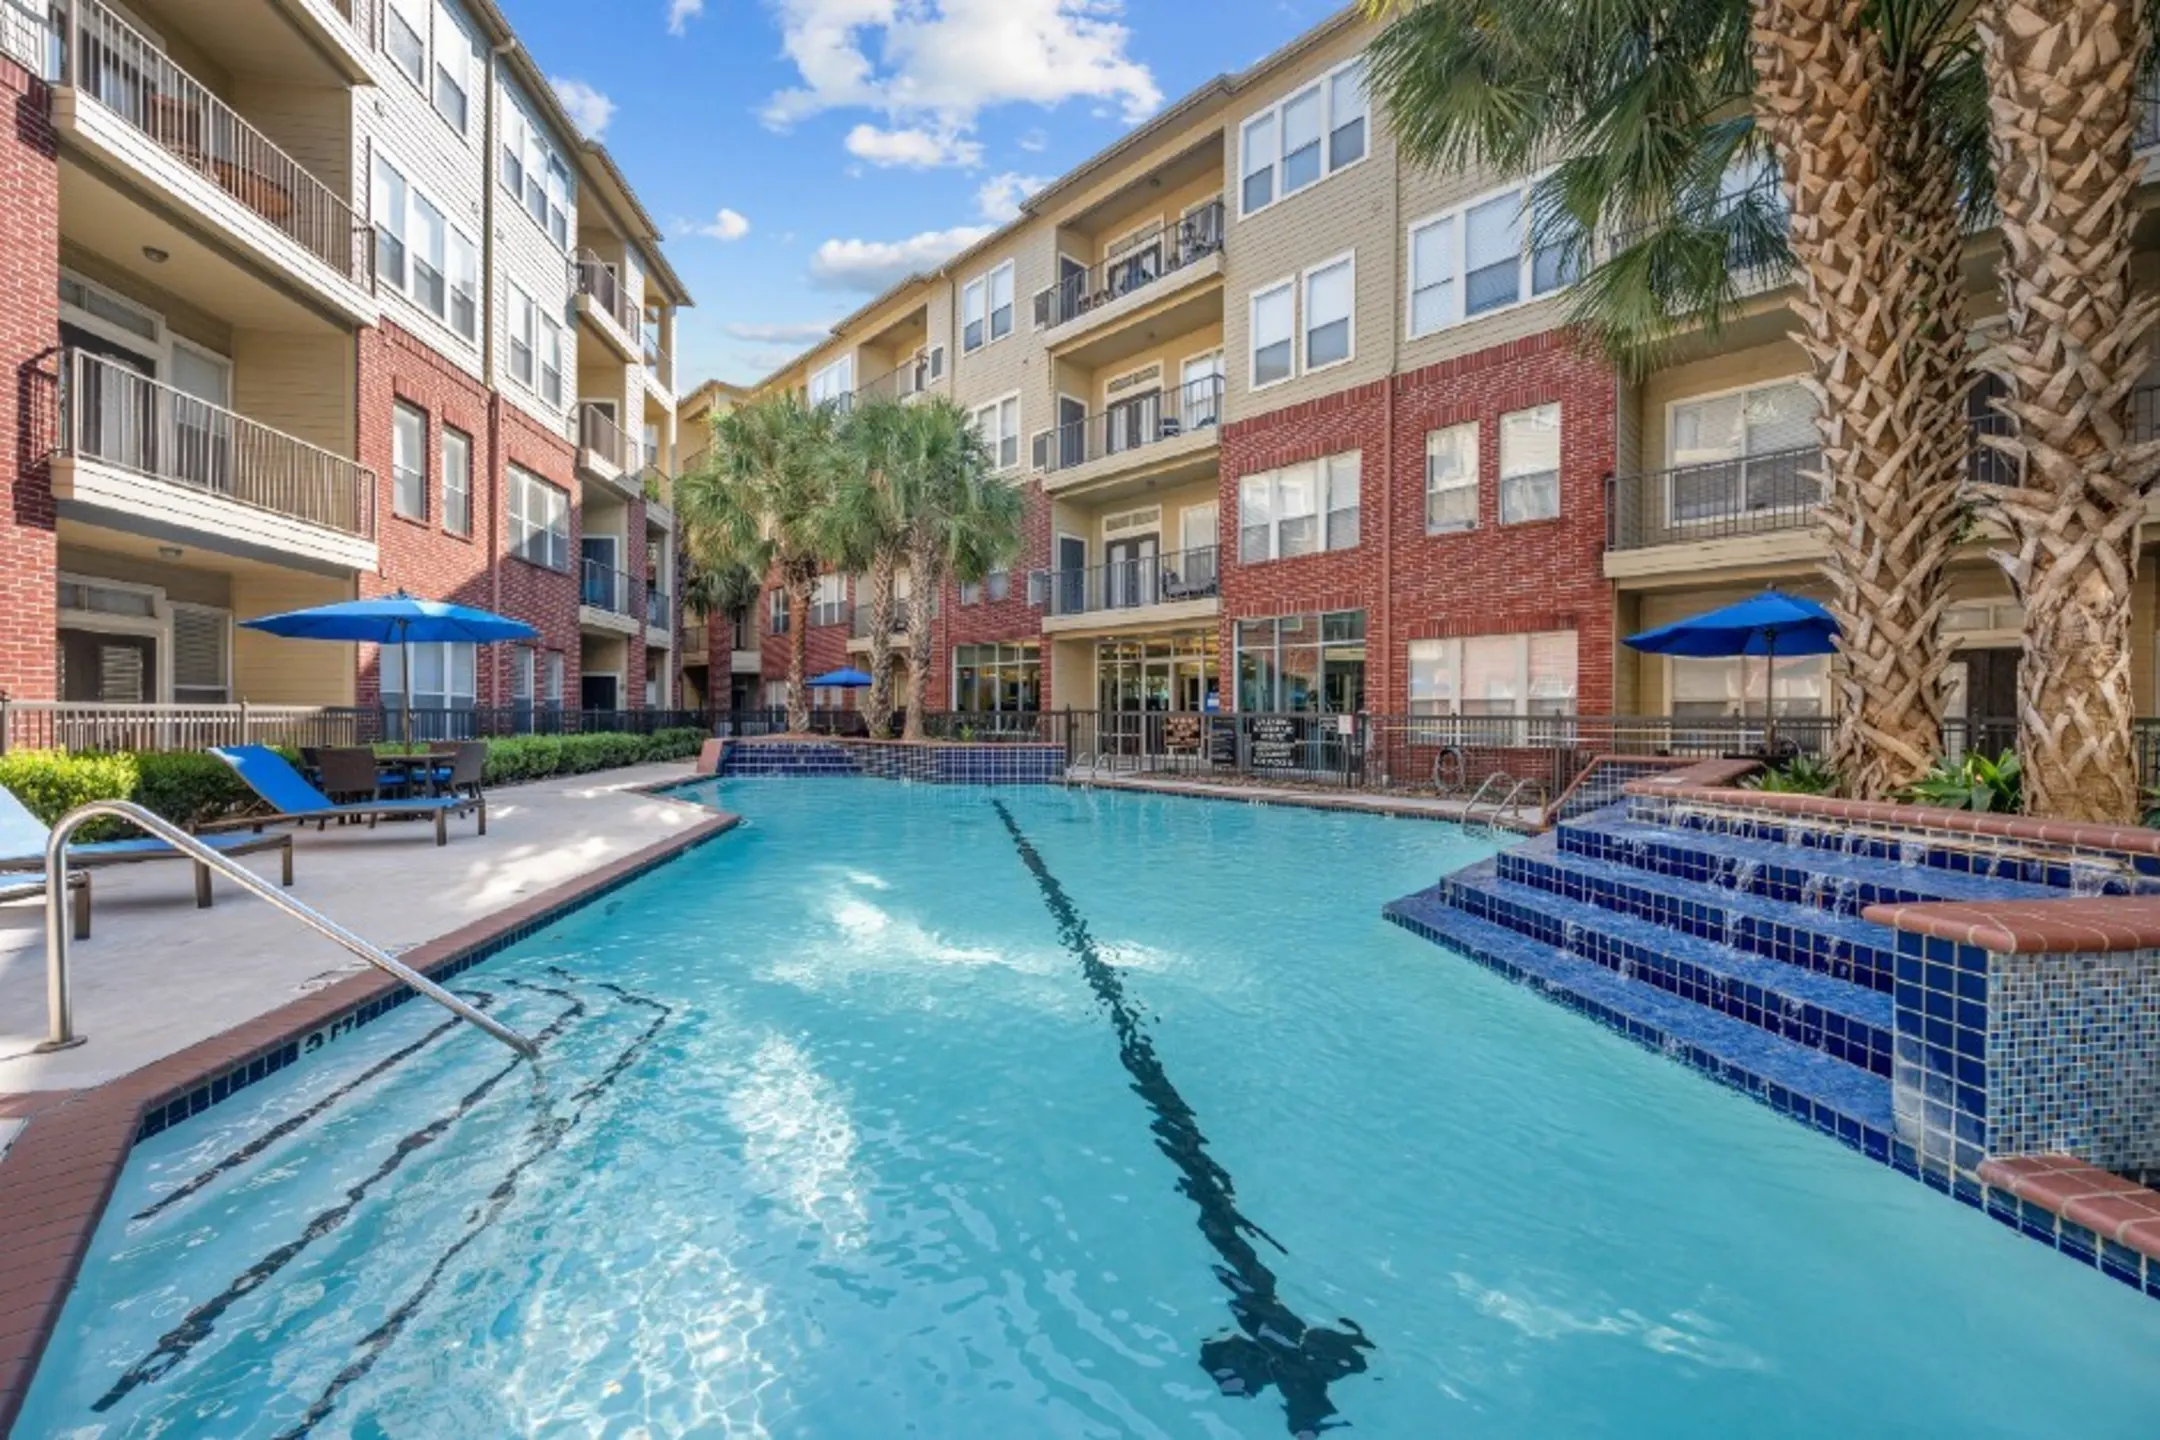 Pool - Galleria Parc Apartments - Houston, TX